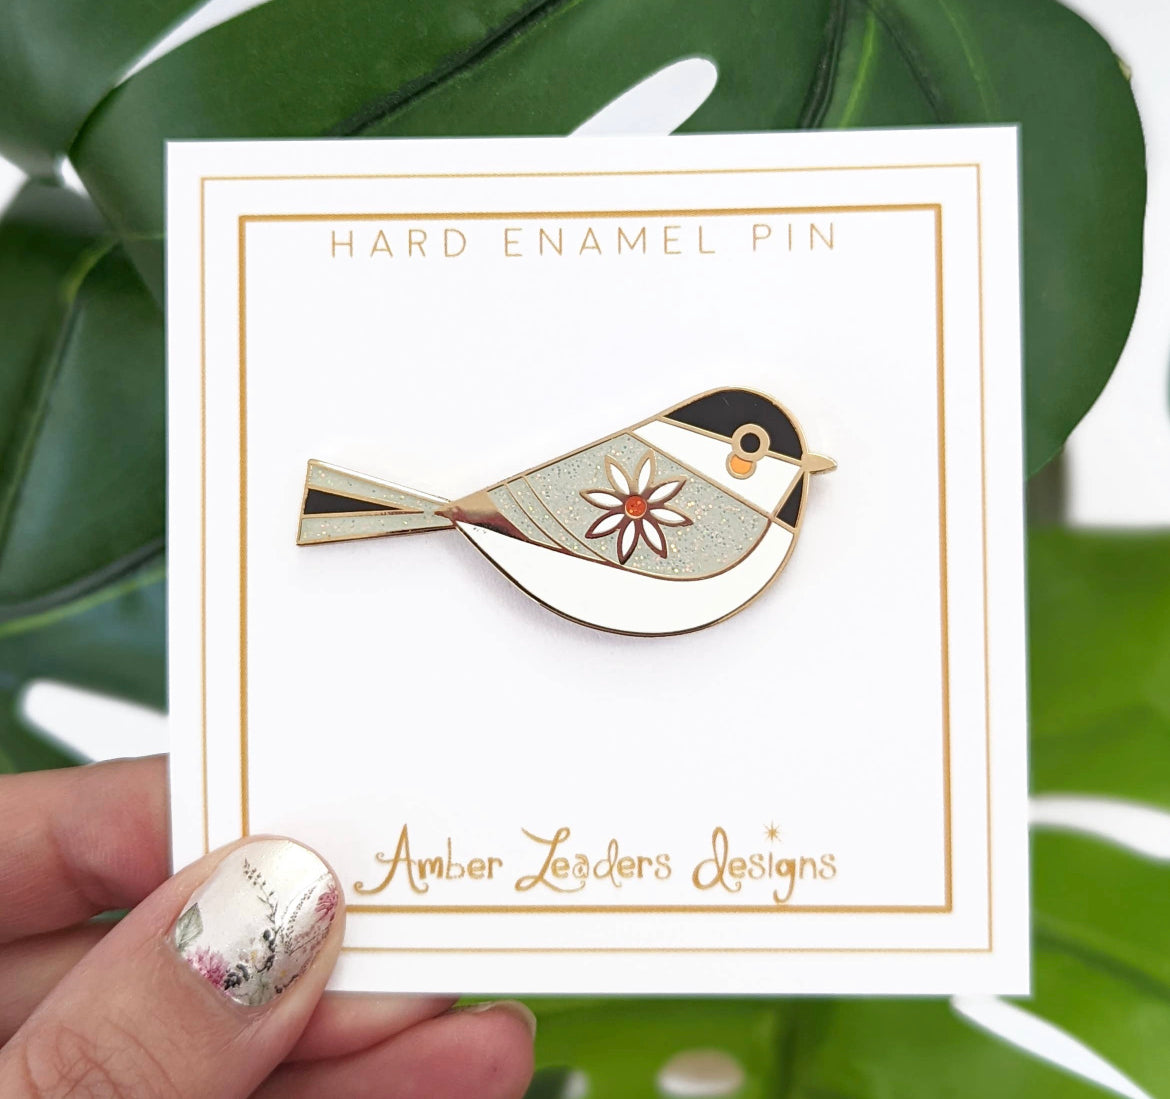 Enameled Pin by Amber Leaders Designs